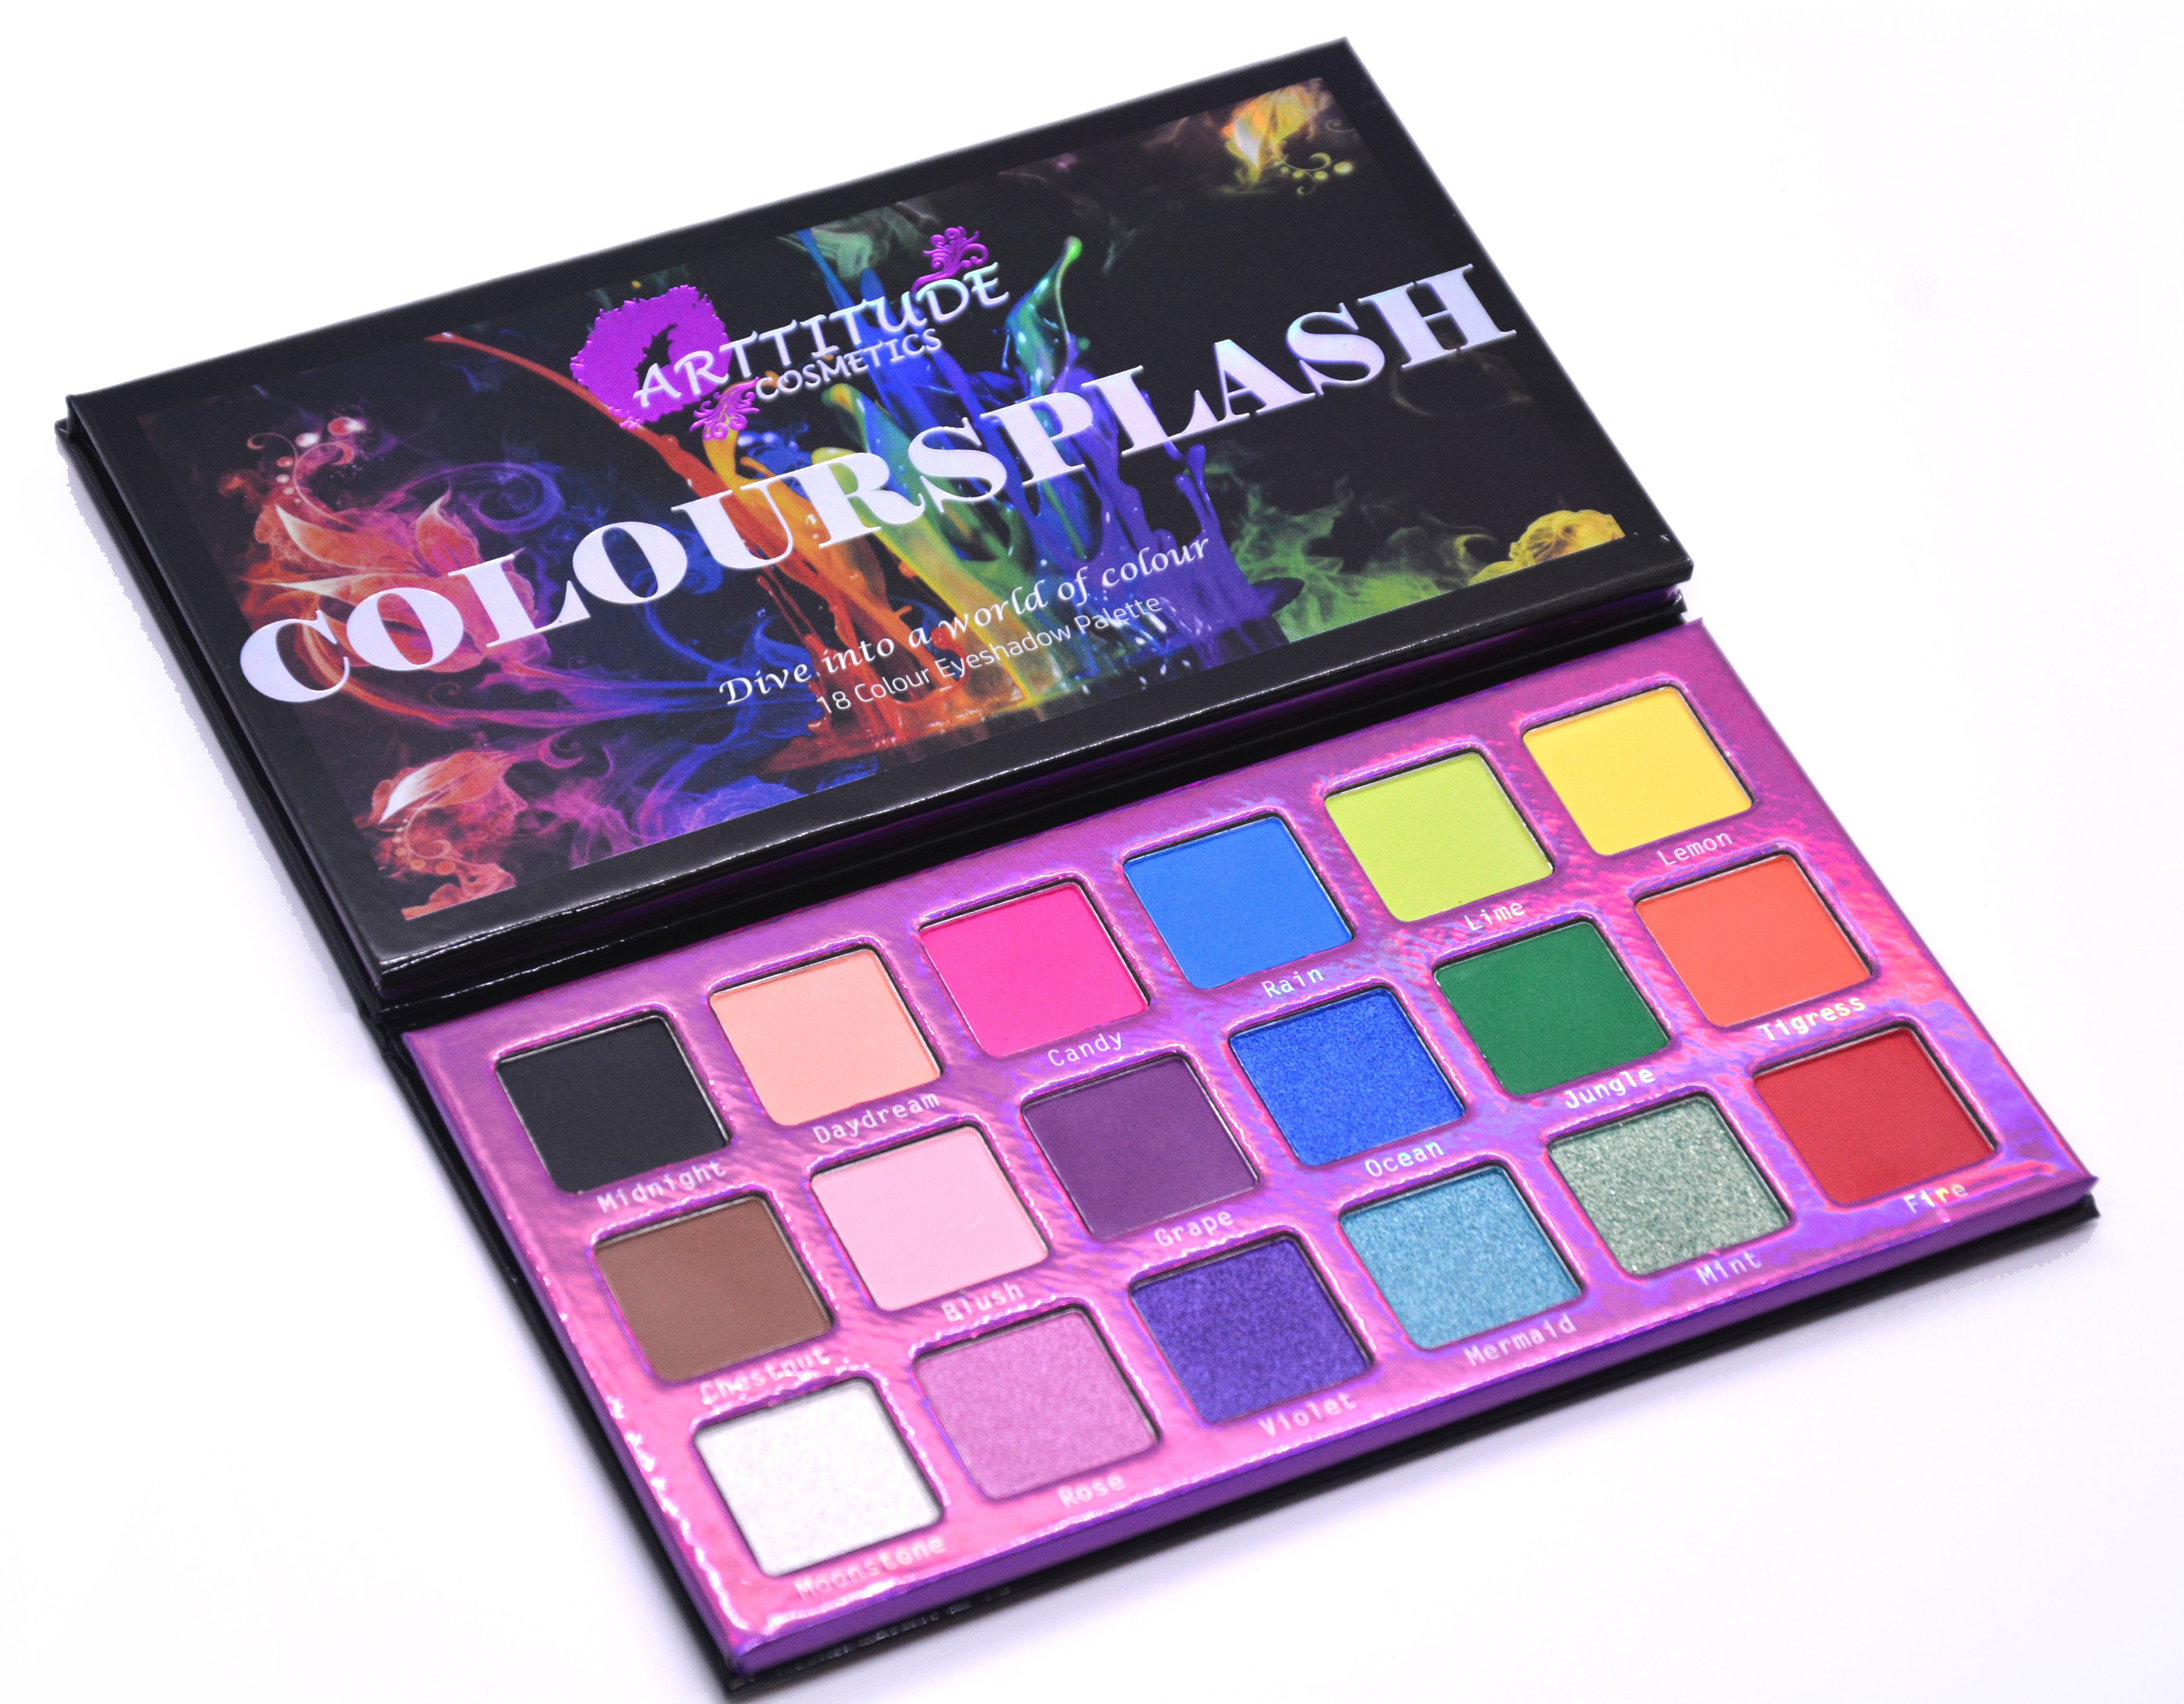 Coloursplash - Eyeshadow Palette - arttitude-cosmetics